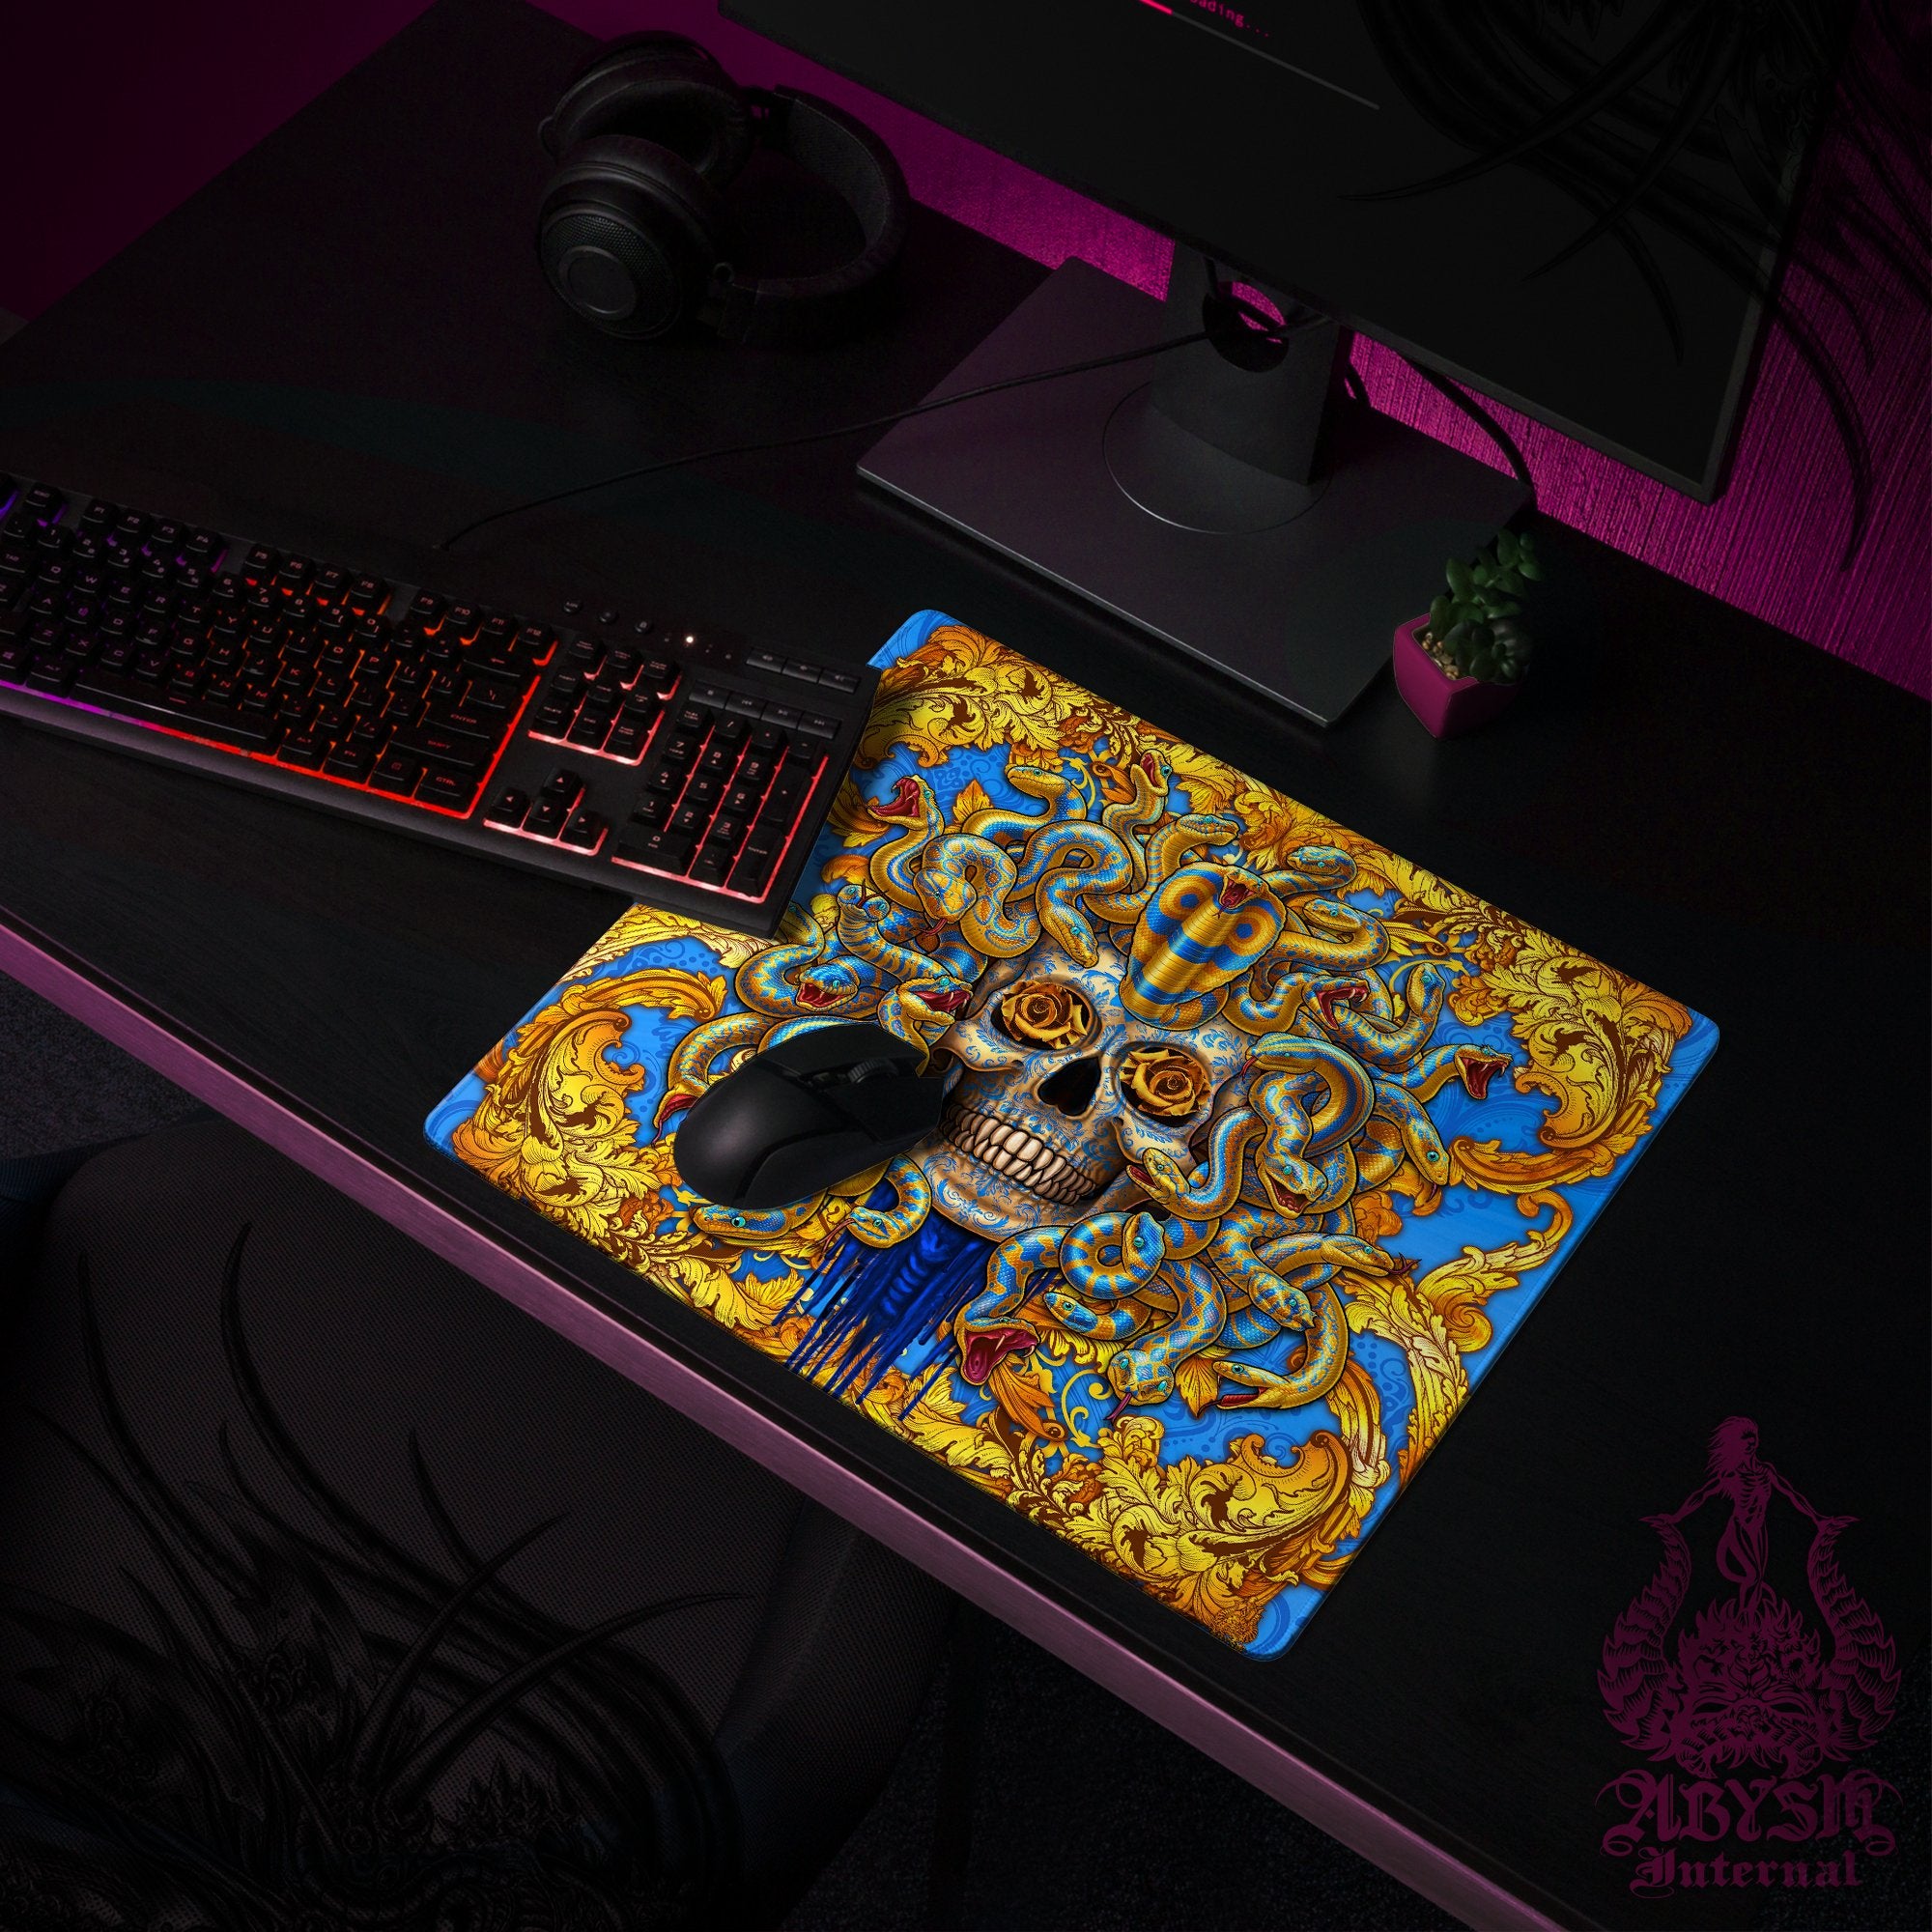 Medusa Workpad, Skull Desk Mat, Mythology Gaming Mouse Pad, Gamer Table Protector Cover, Dark Fantasy Art Print - Cyan Gold, 2 Options - Abysm Internal